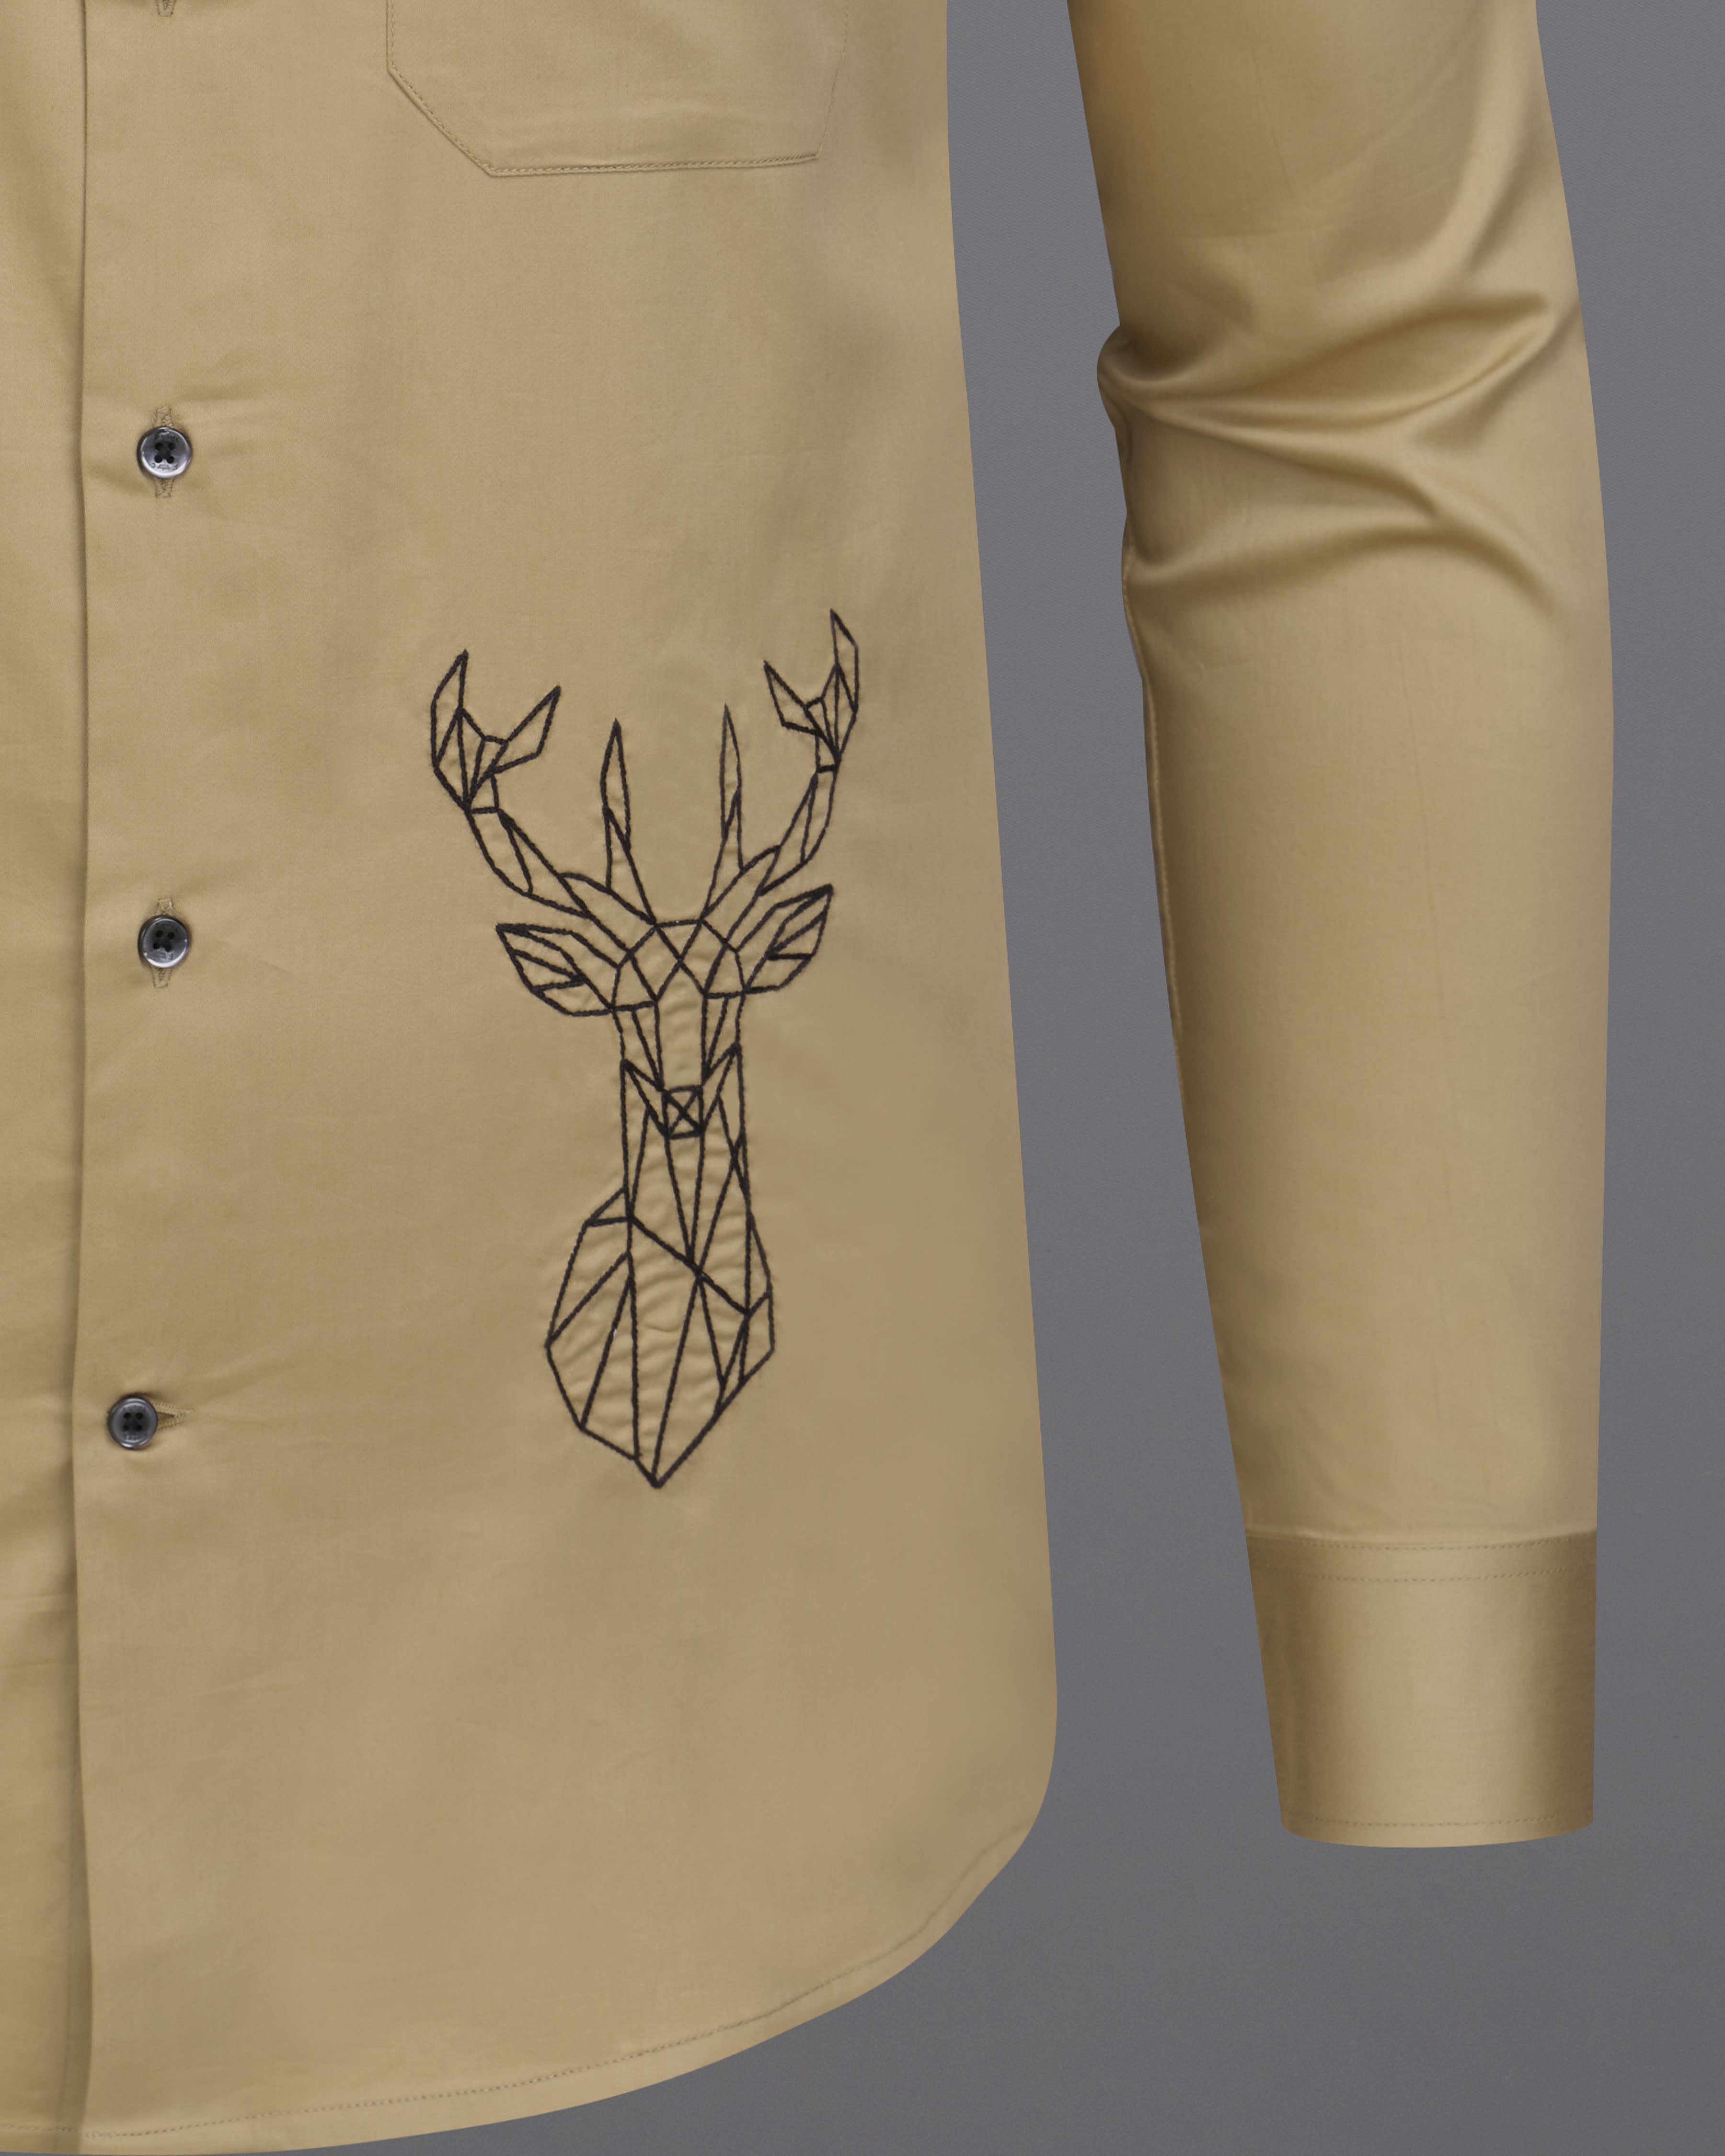 Bronco Brown with Deer Subtle Sheen Embroidered Super Soft Premium Cotton Designer Shirt 8733-BLK-E011-38, 8733-BLK-E011-H-38, 8733-BLK-E011-39, 8733-BLK-E011-H-39, 8733-BLK-E011-40, 8733-BLK-E011-H-40, 8733-BLK-E011-42, 8733-BLK-E011-H-42, 8733-BLK-E011-44, 8733-BLK-E011-H-44, 8733-BLK-E011-46, 8733-BLK-E011-H-46, 8733-BLK-E011-48, 8733-BLK-E011-H-48, 8733-BLK-E011-50, 8733-BLK-E011-H-50, 8733-BLK-E011-52, 8733-BLK-E011-H-52